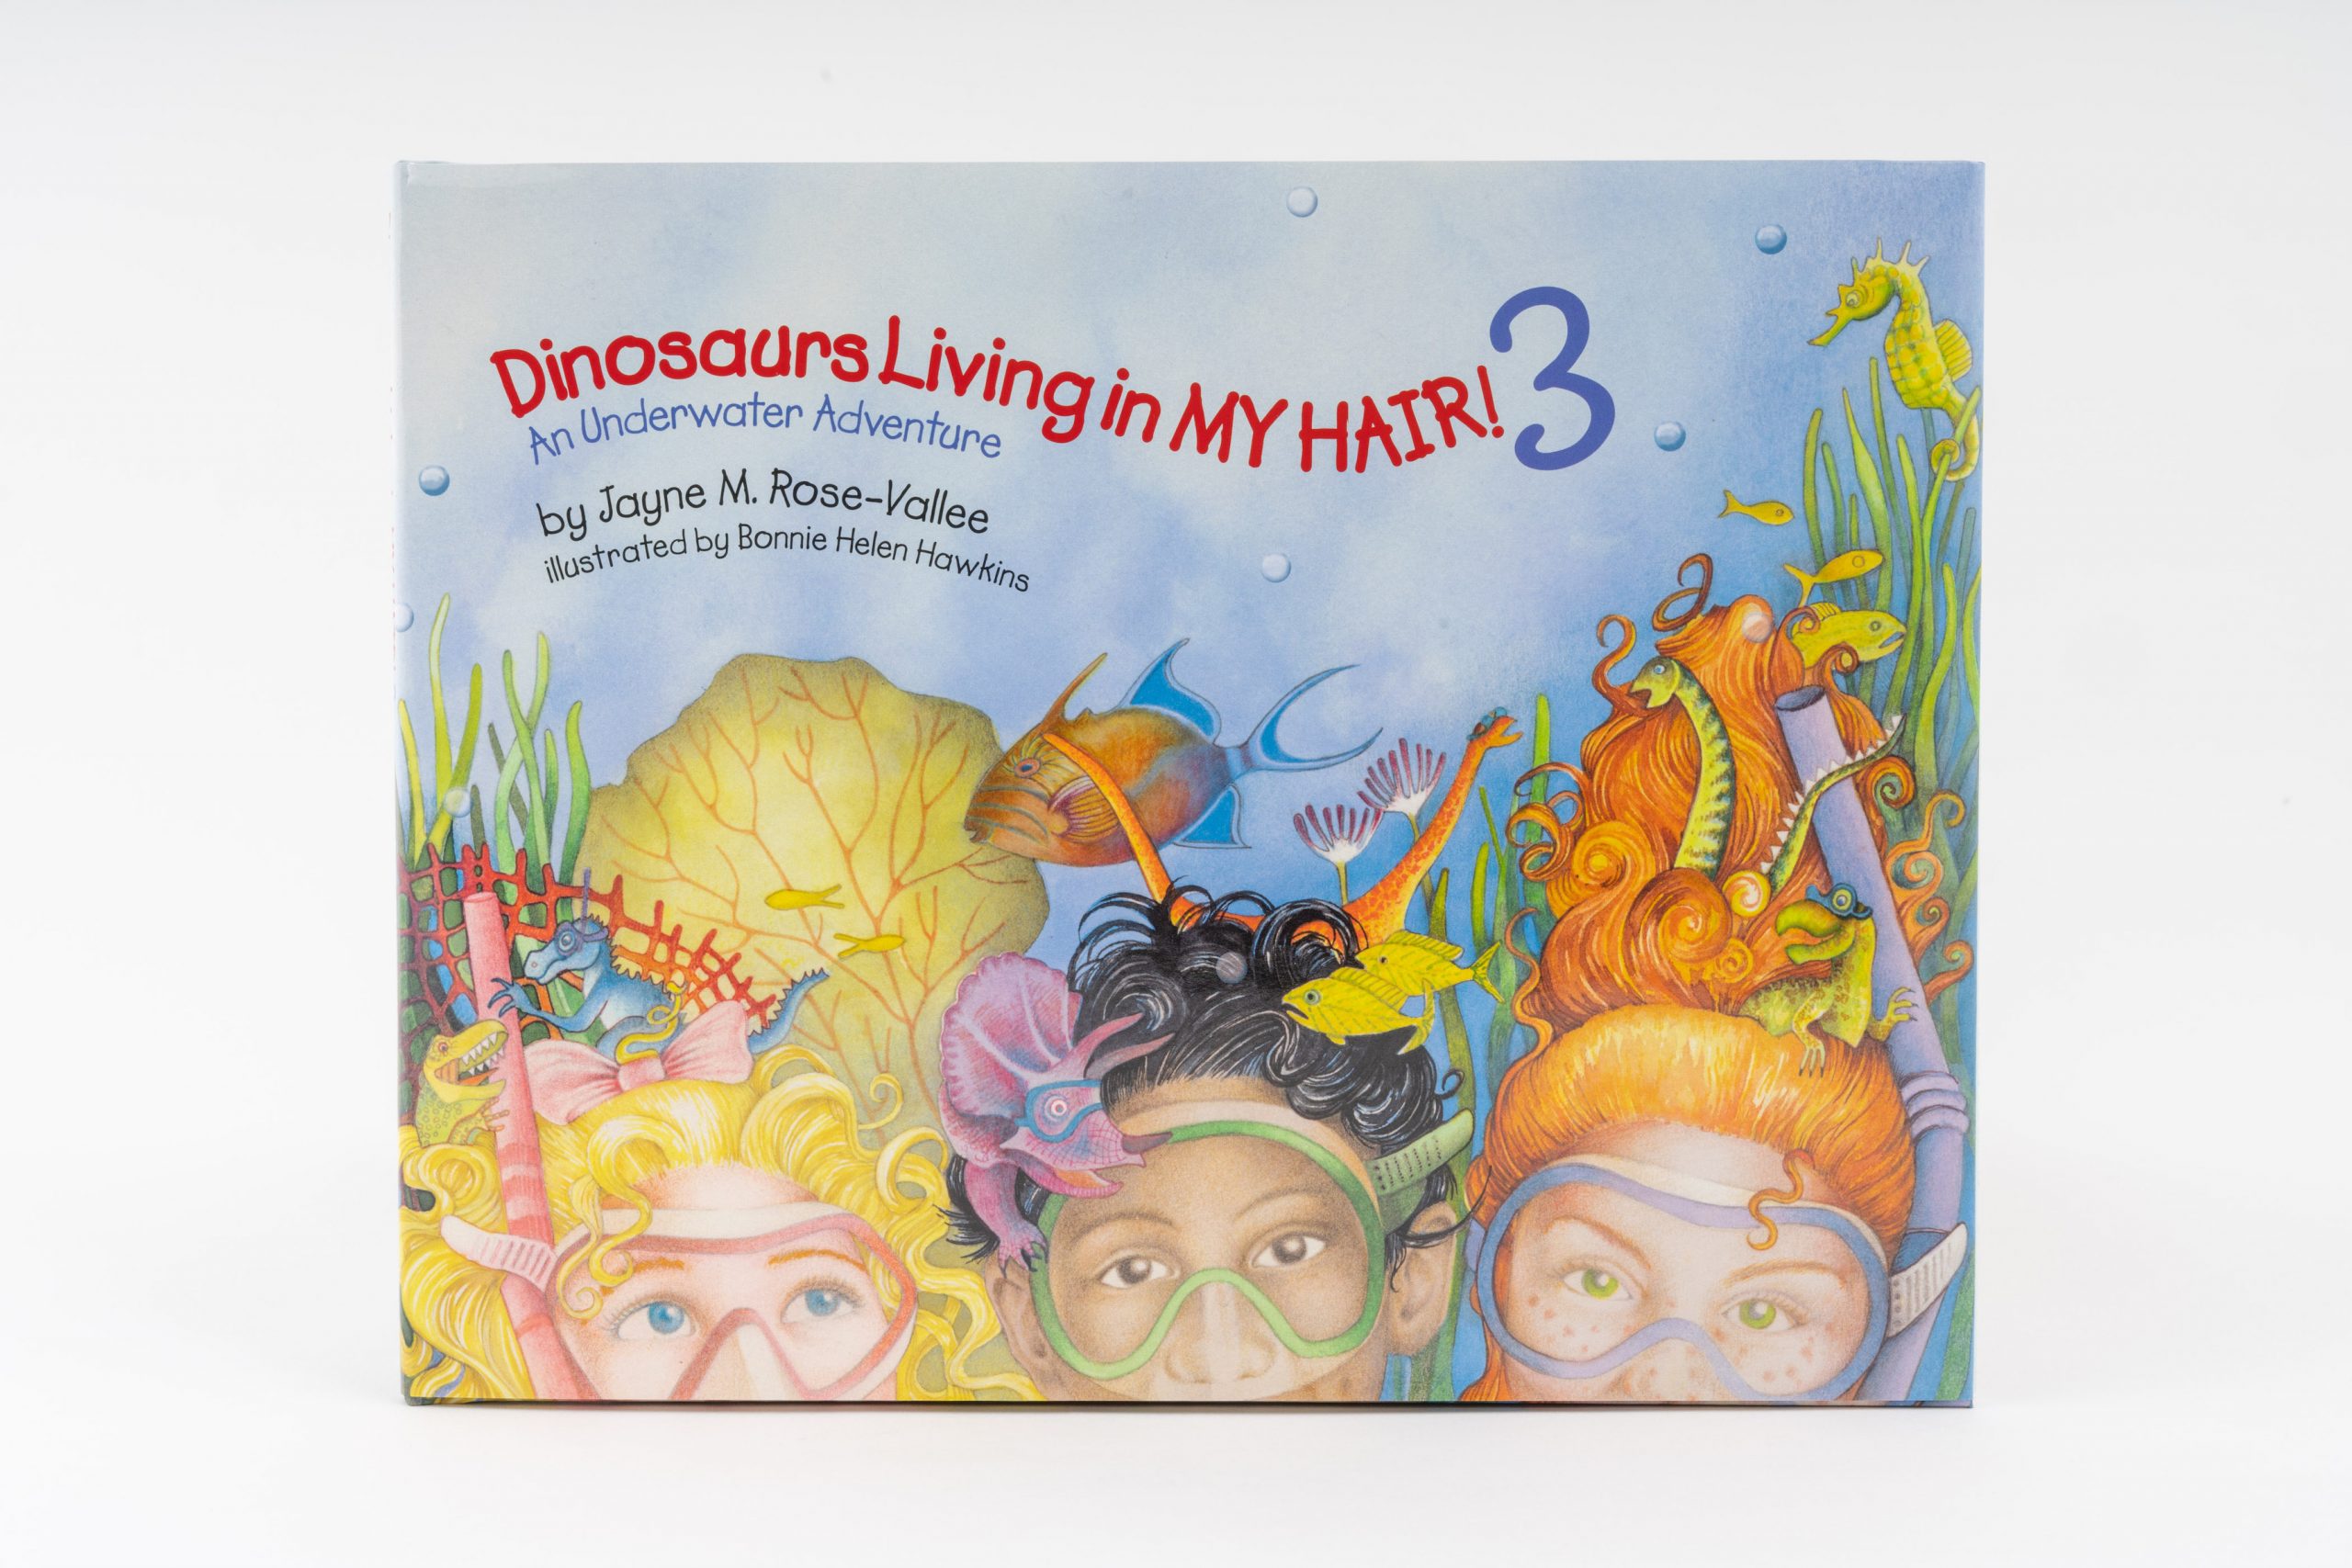 Dinosaurs Living in my Hair!3 An Underwater Adventure